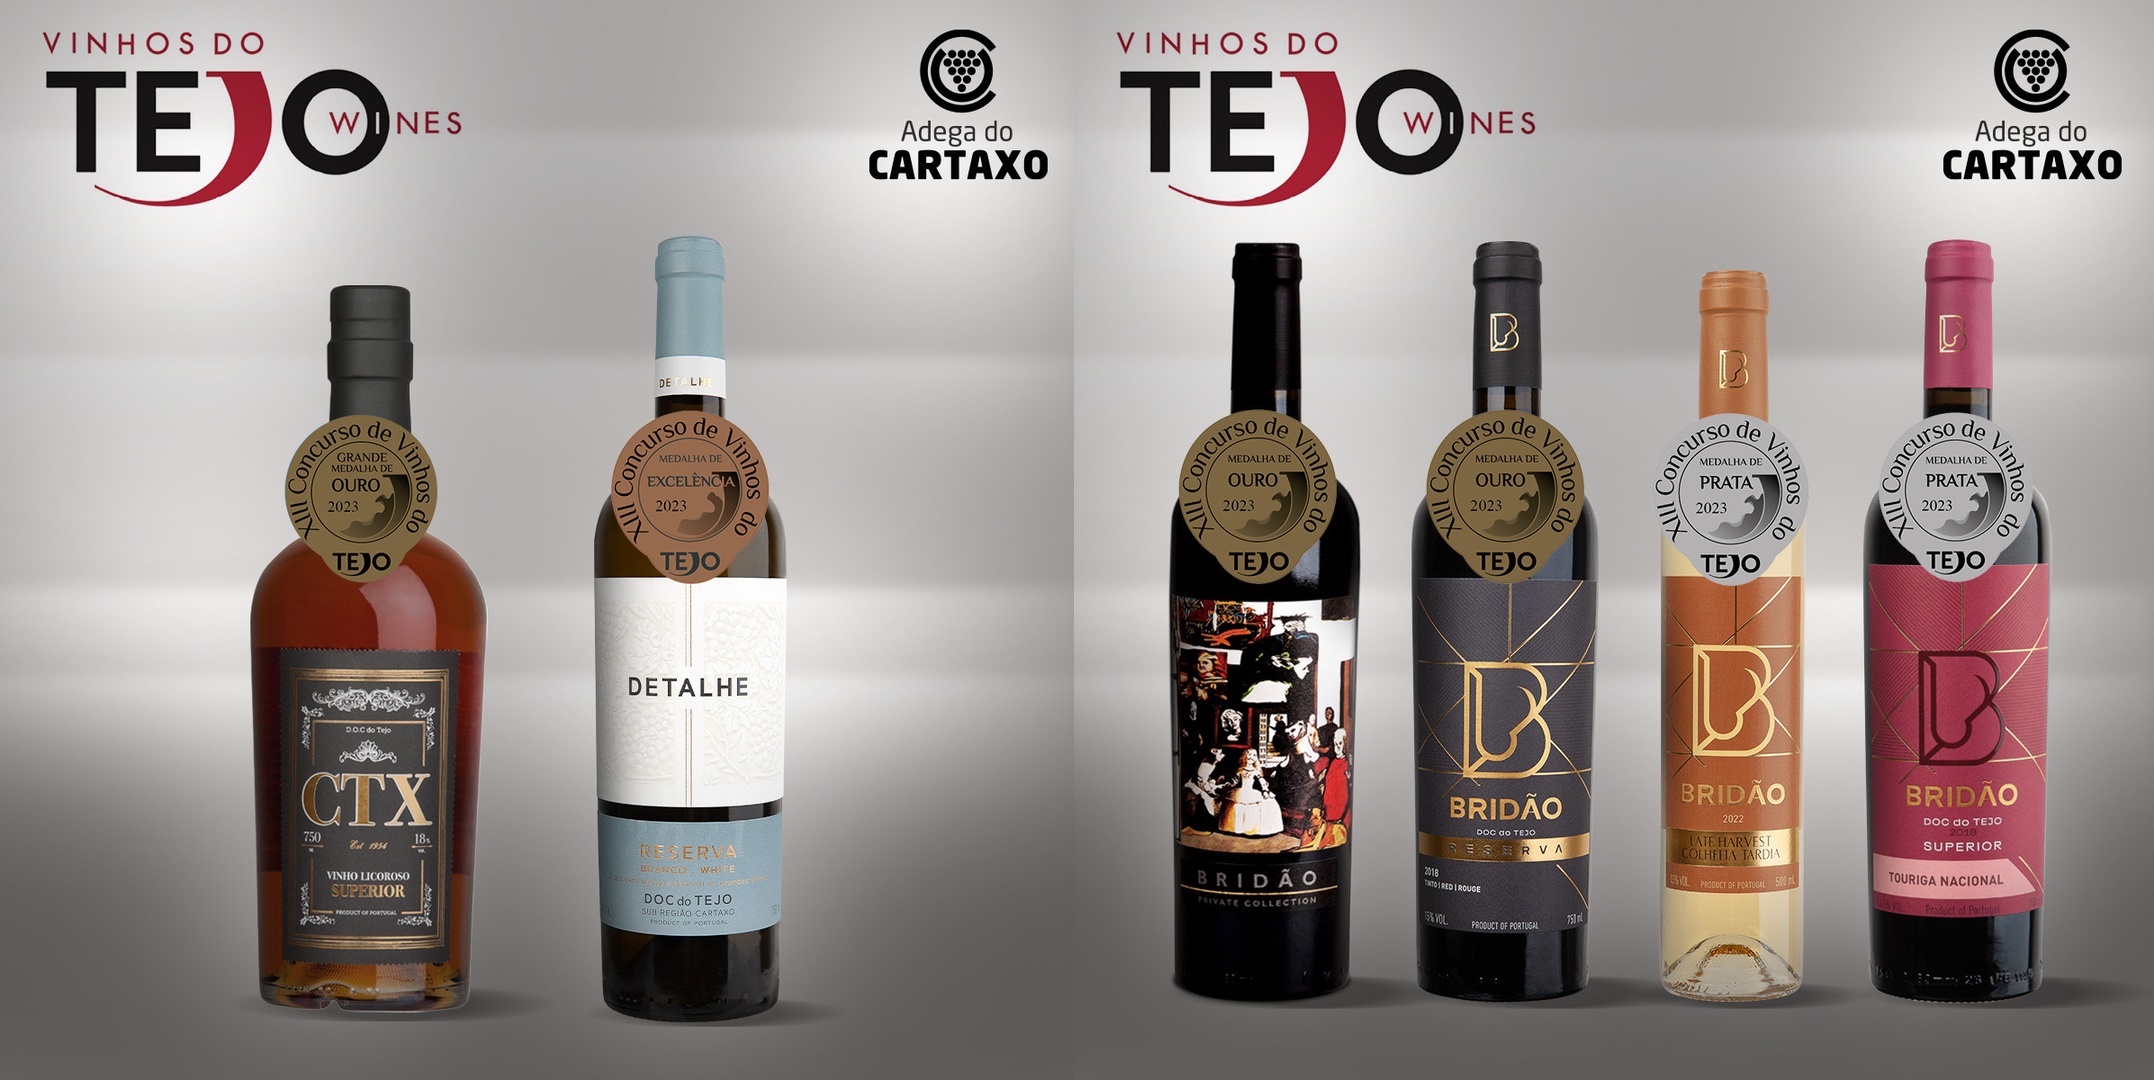 Detalhe Reserva Branco, a wine of Excellence!